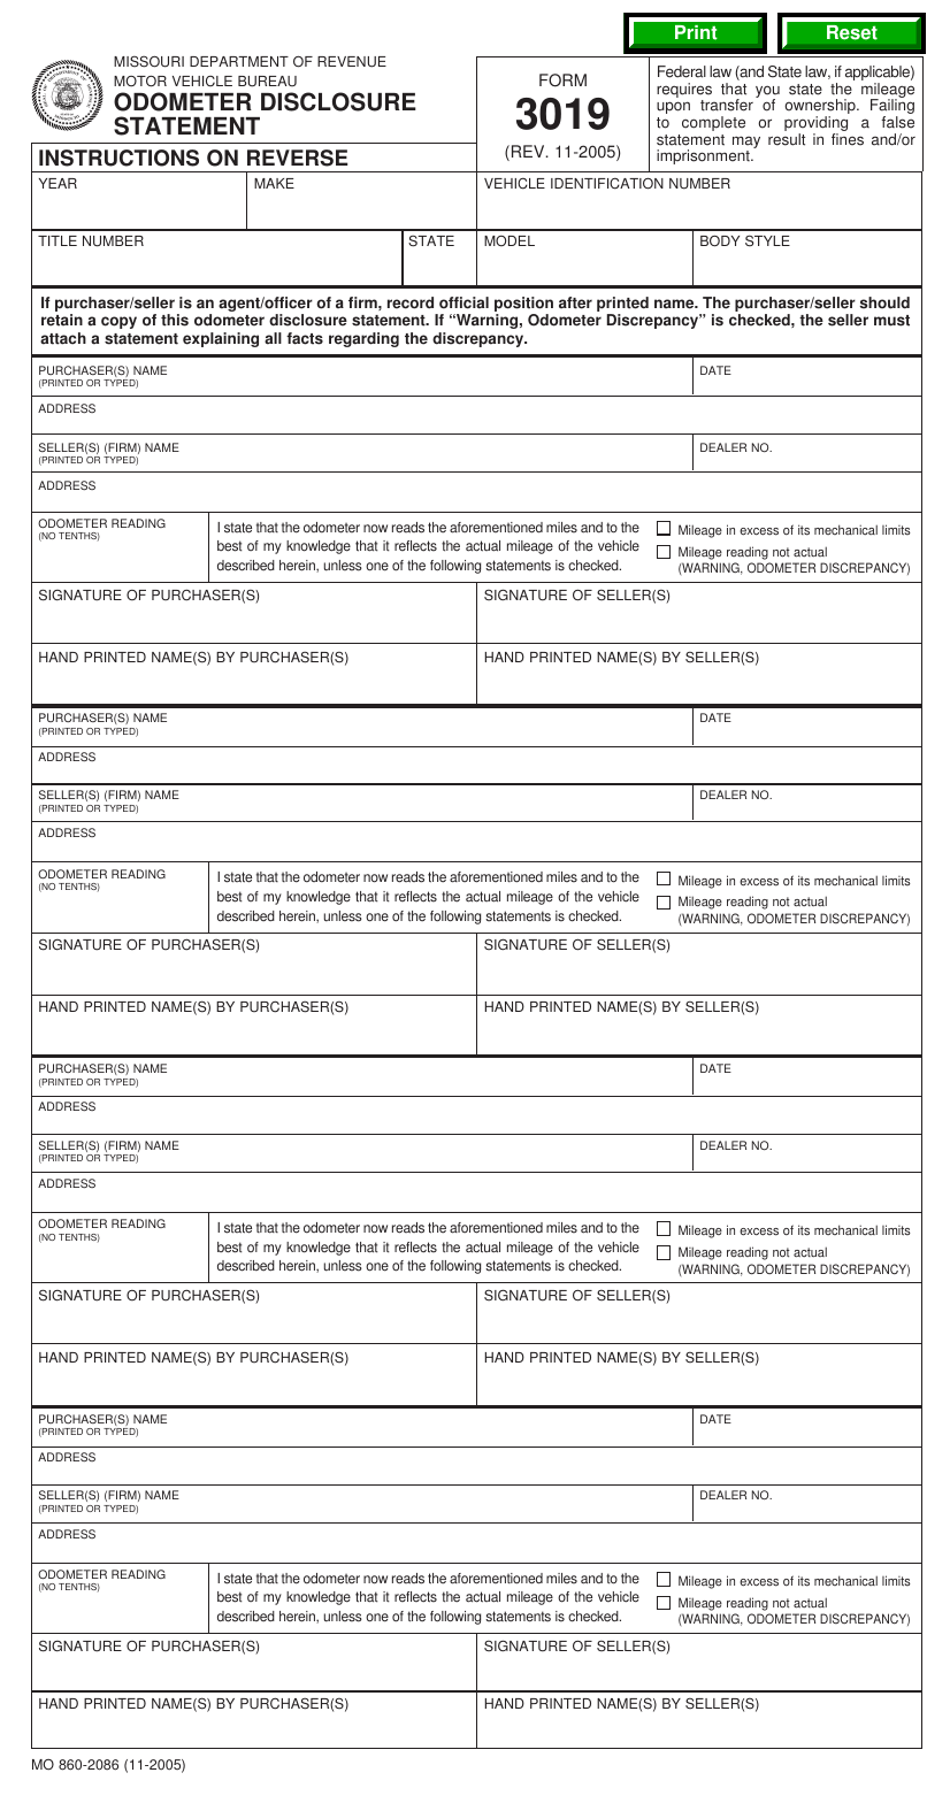 Form 3019 Odometer Disclosure Statement - Missouri, Page 1